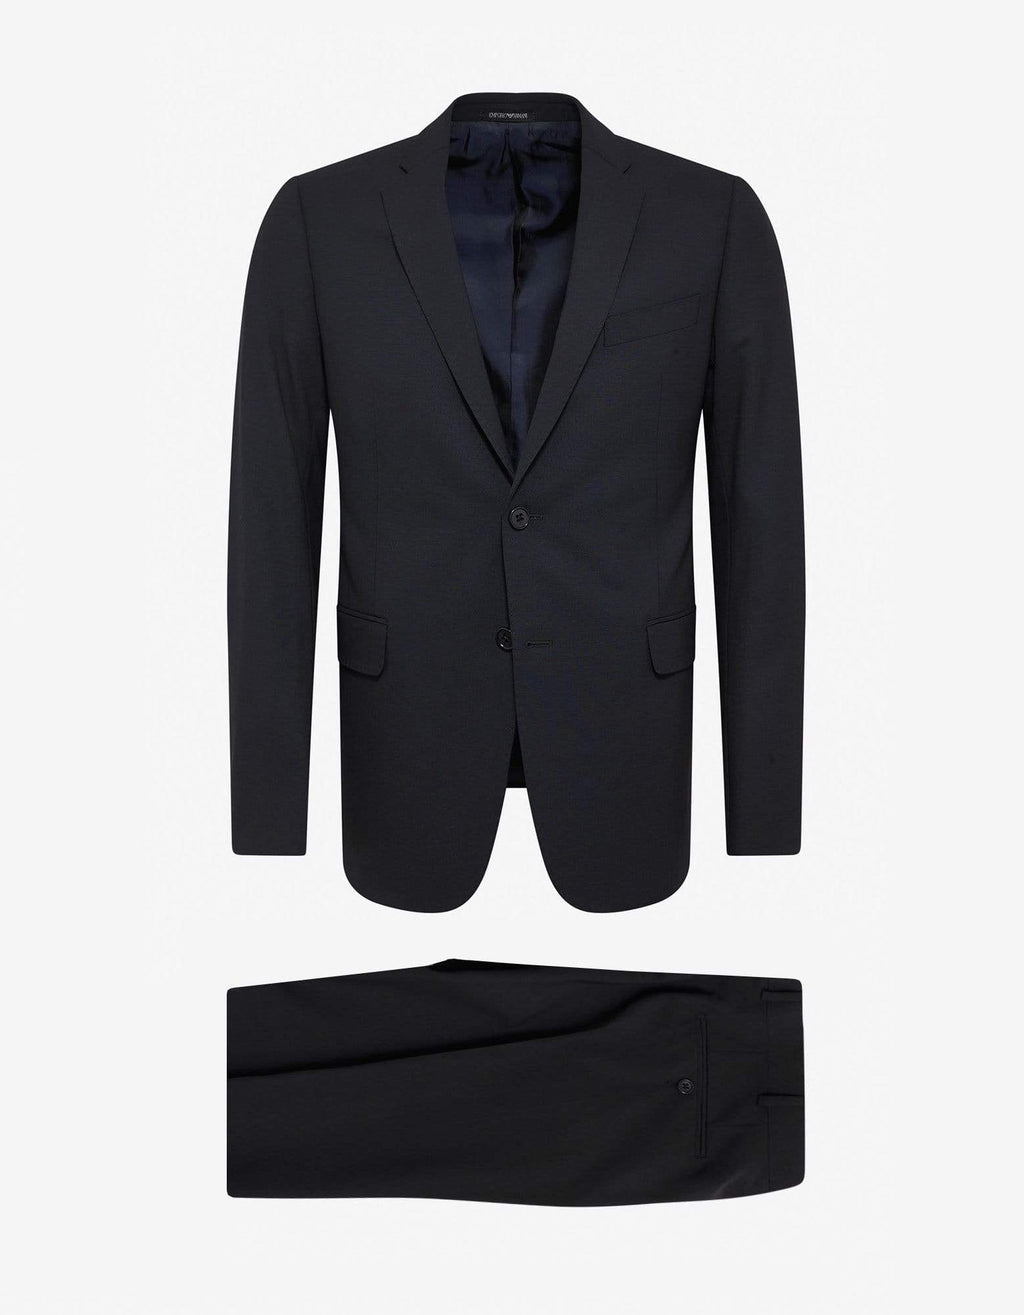 Emporio Armani Emporio Armani Navy Blue Wool-Blend Two-Button Suit